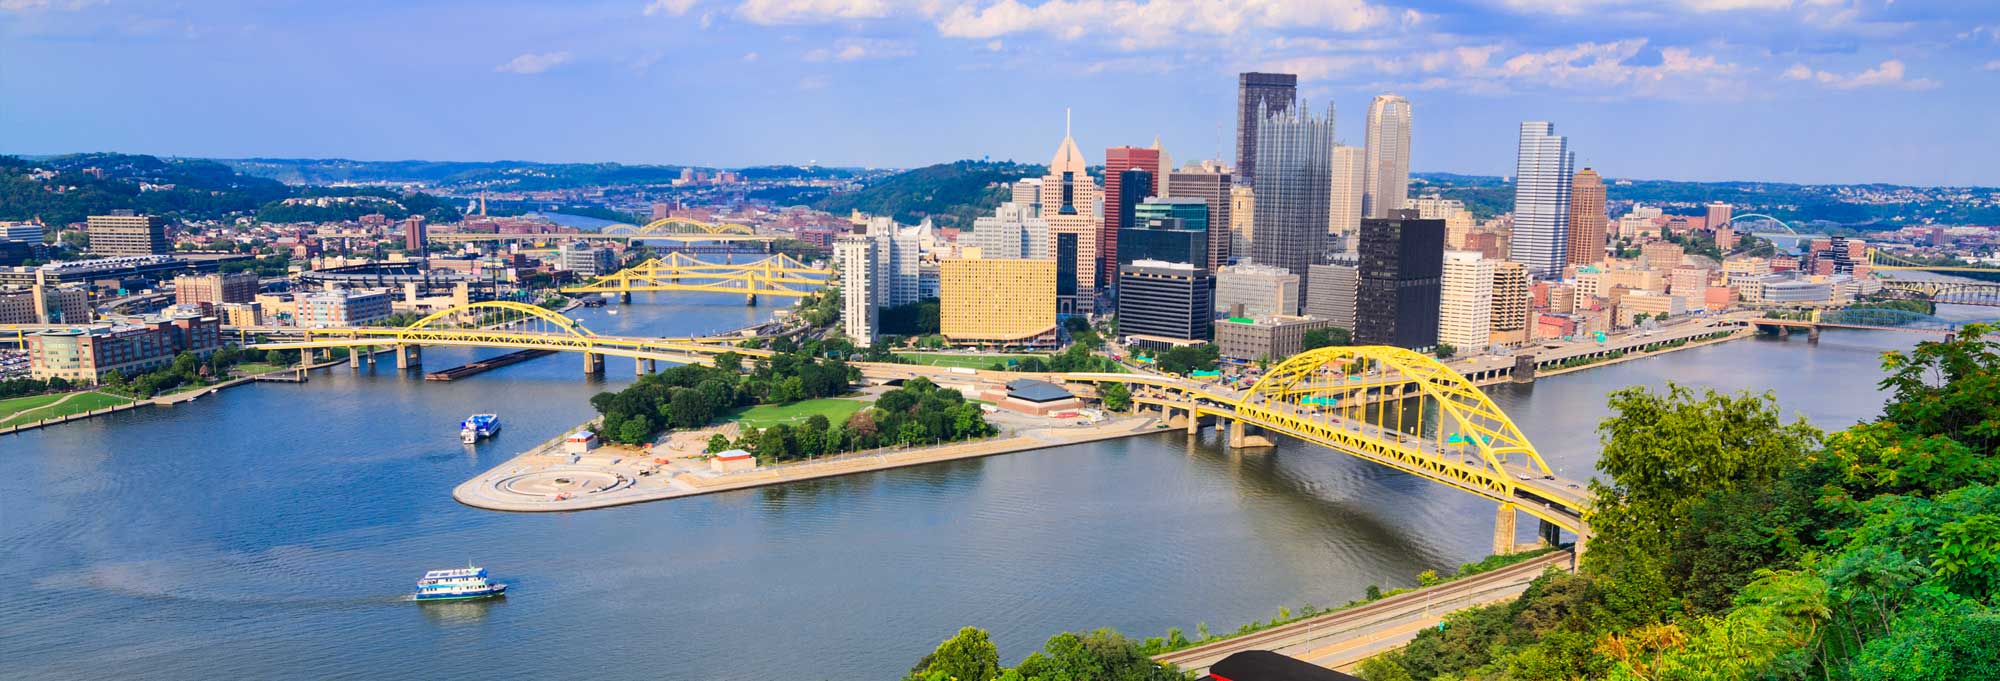 Pittsburgh Banner Image 1